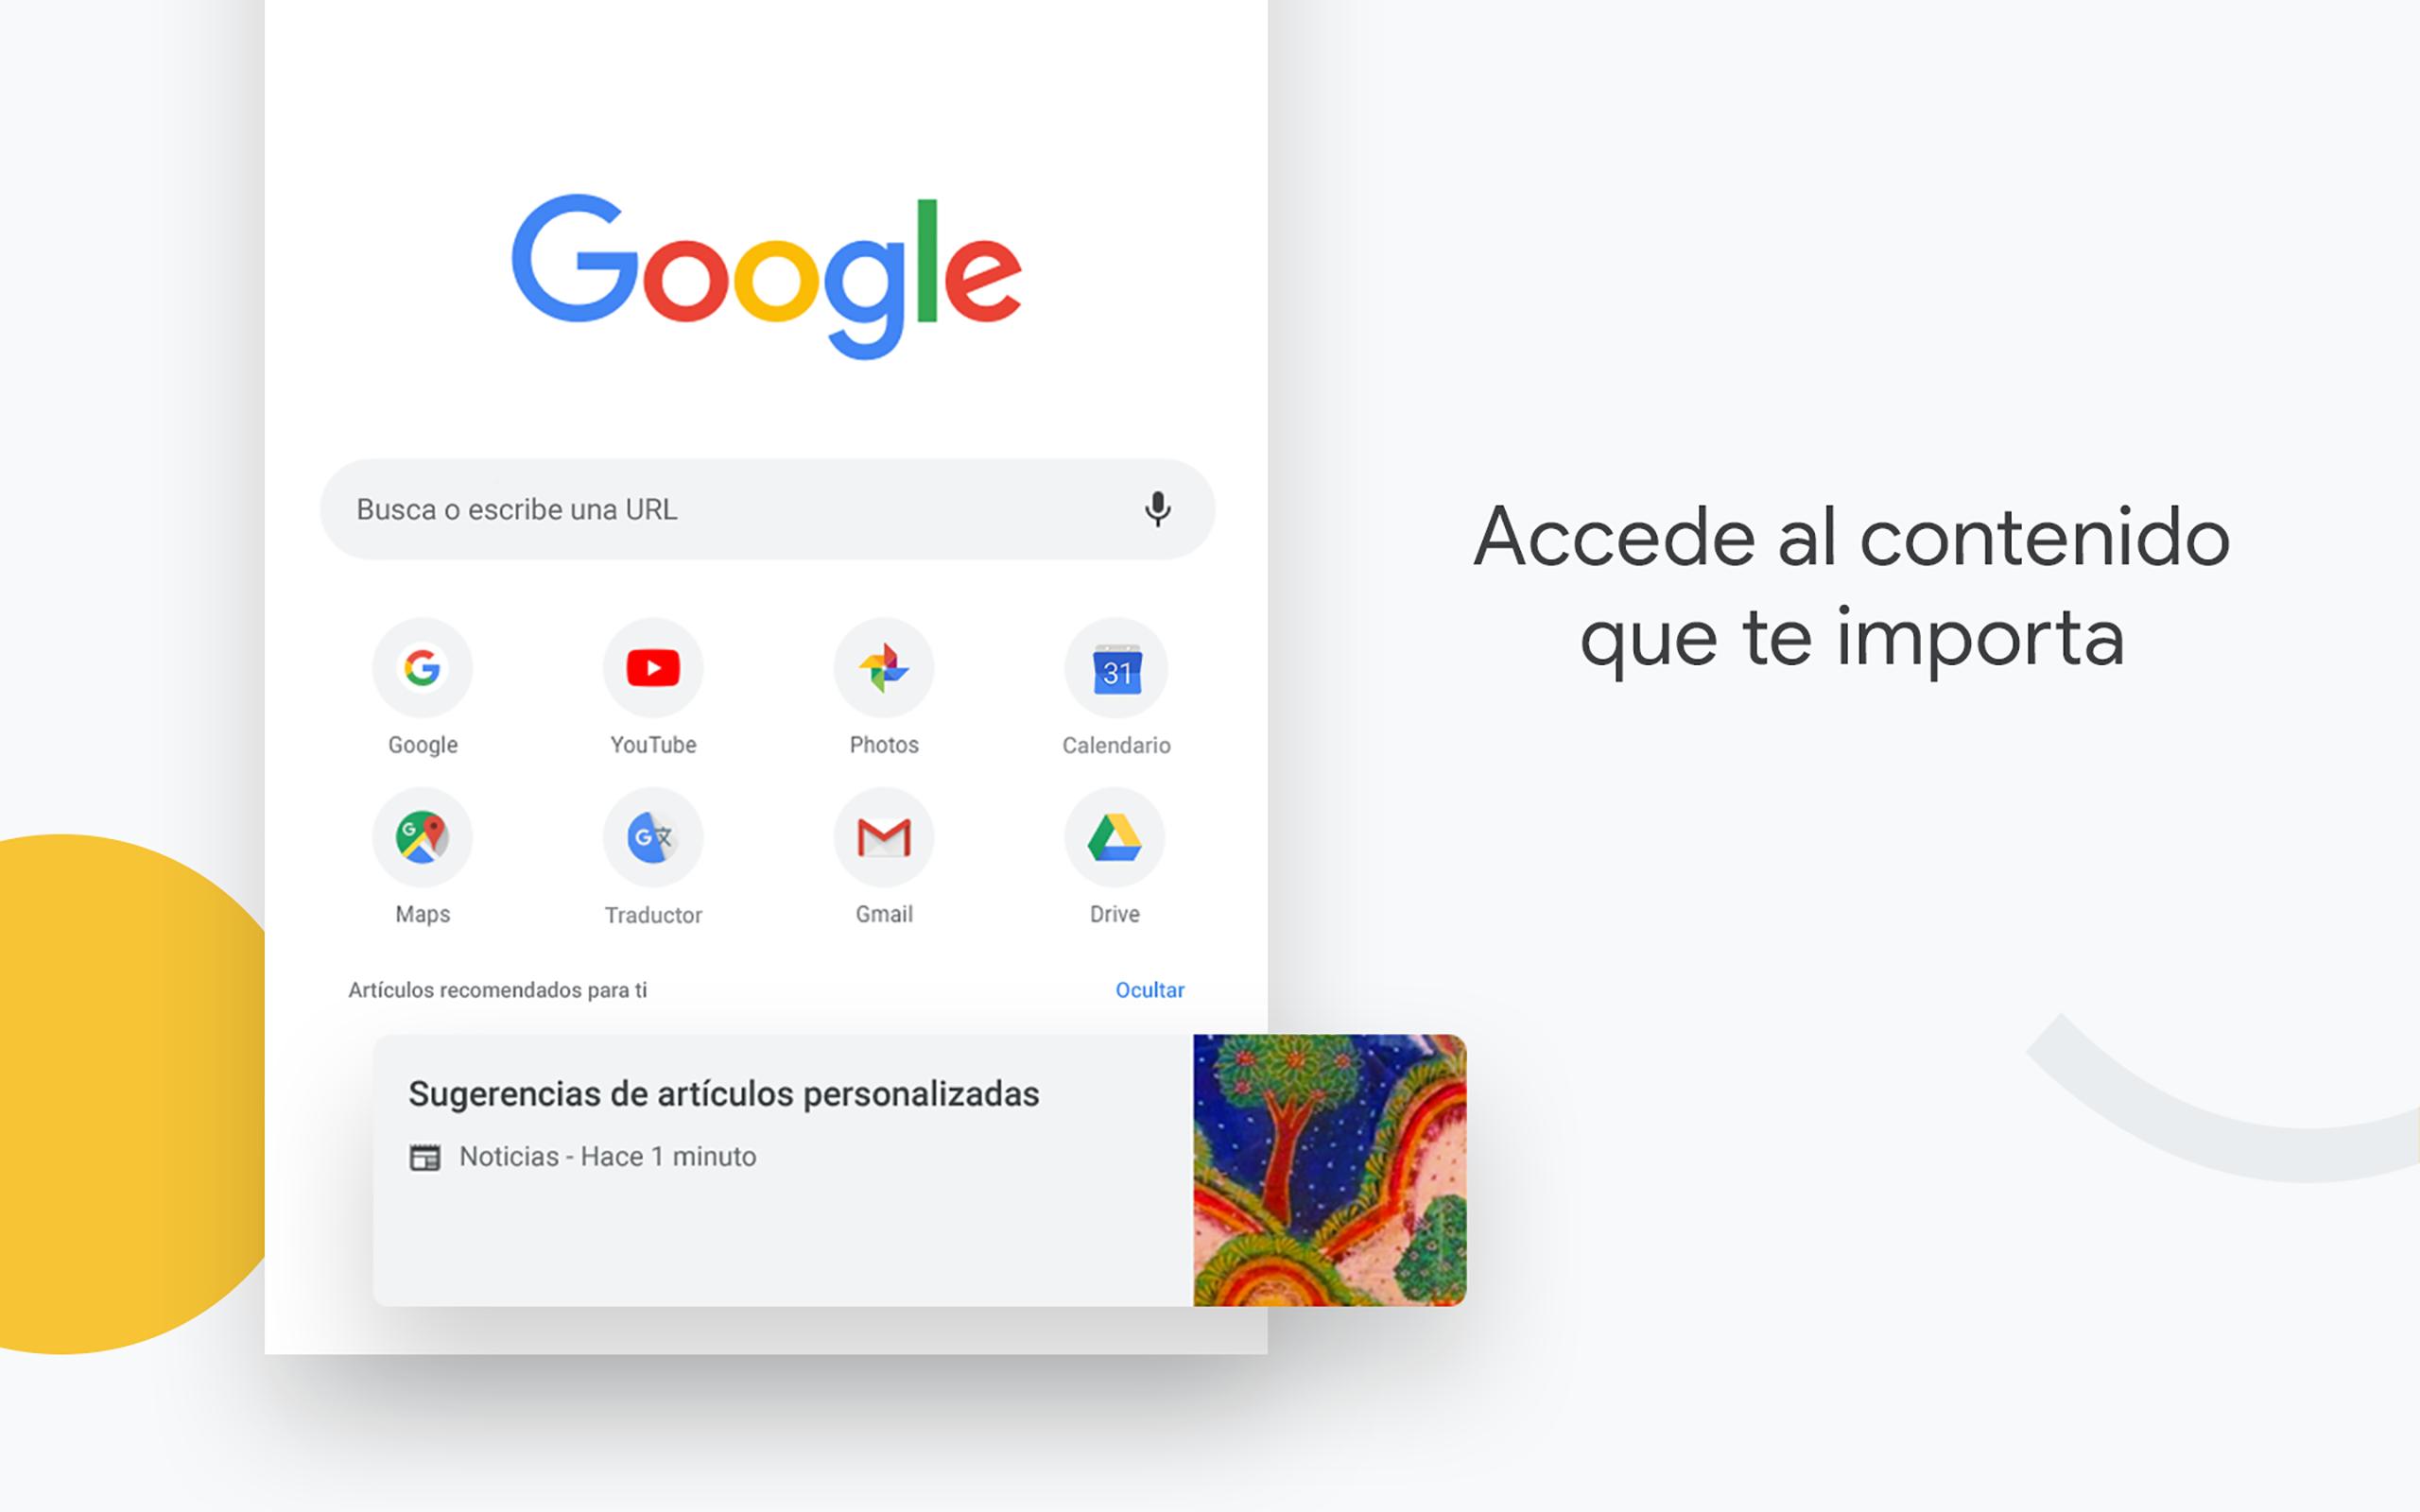 Google Chrome Rapido Y Seguro For Android Apk Download